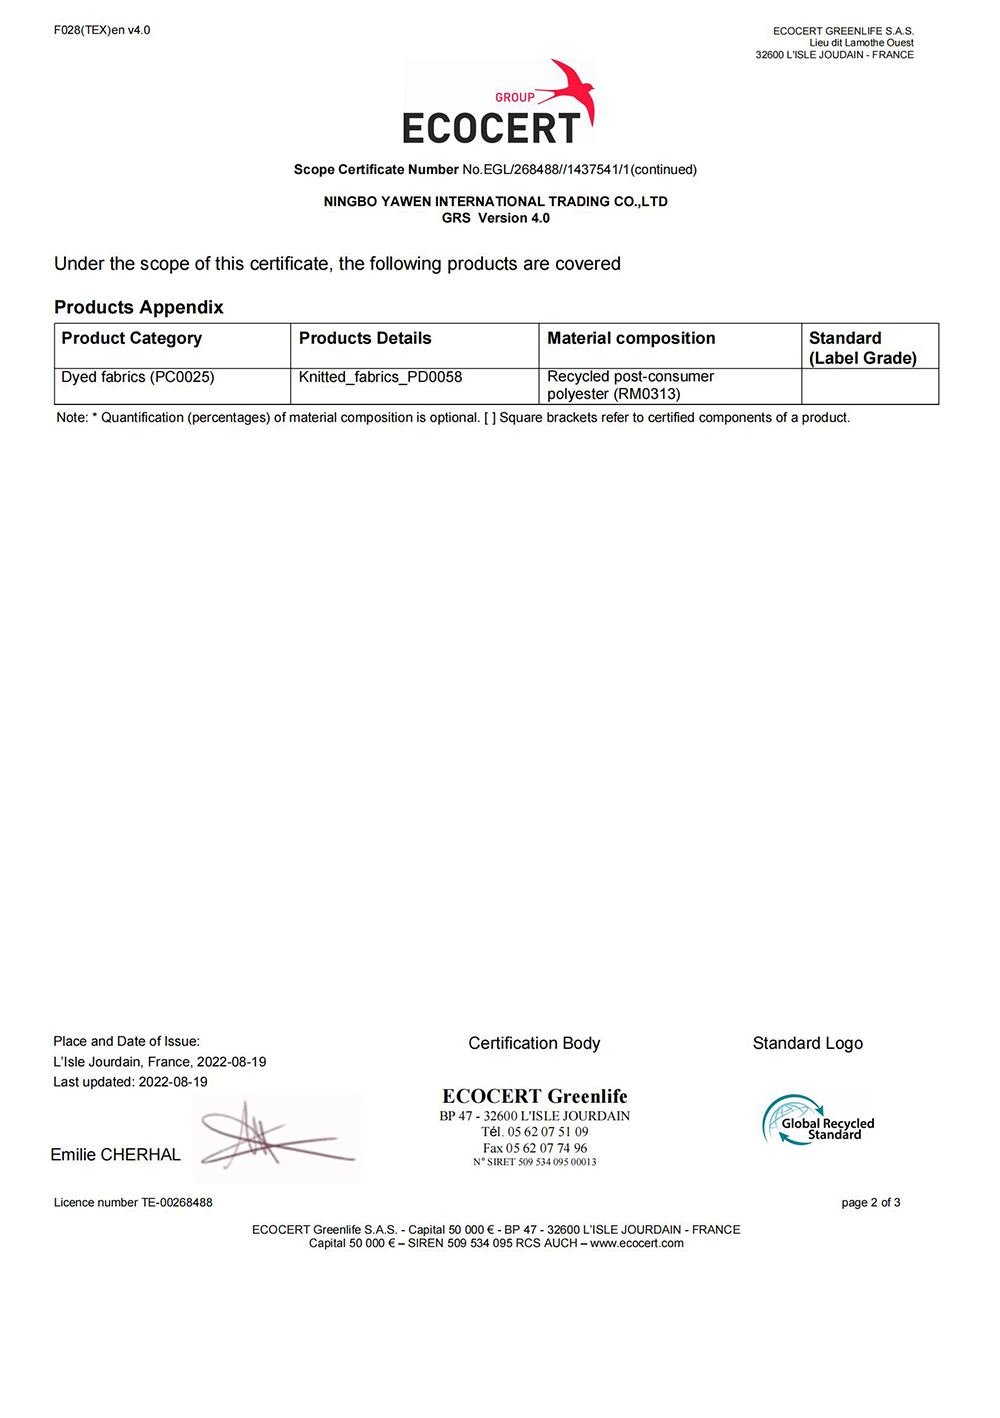 Certificate GRS 4.0-Ningbo Yawen 2022_01